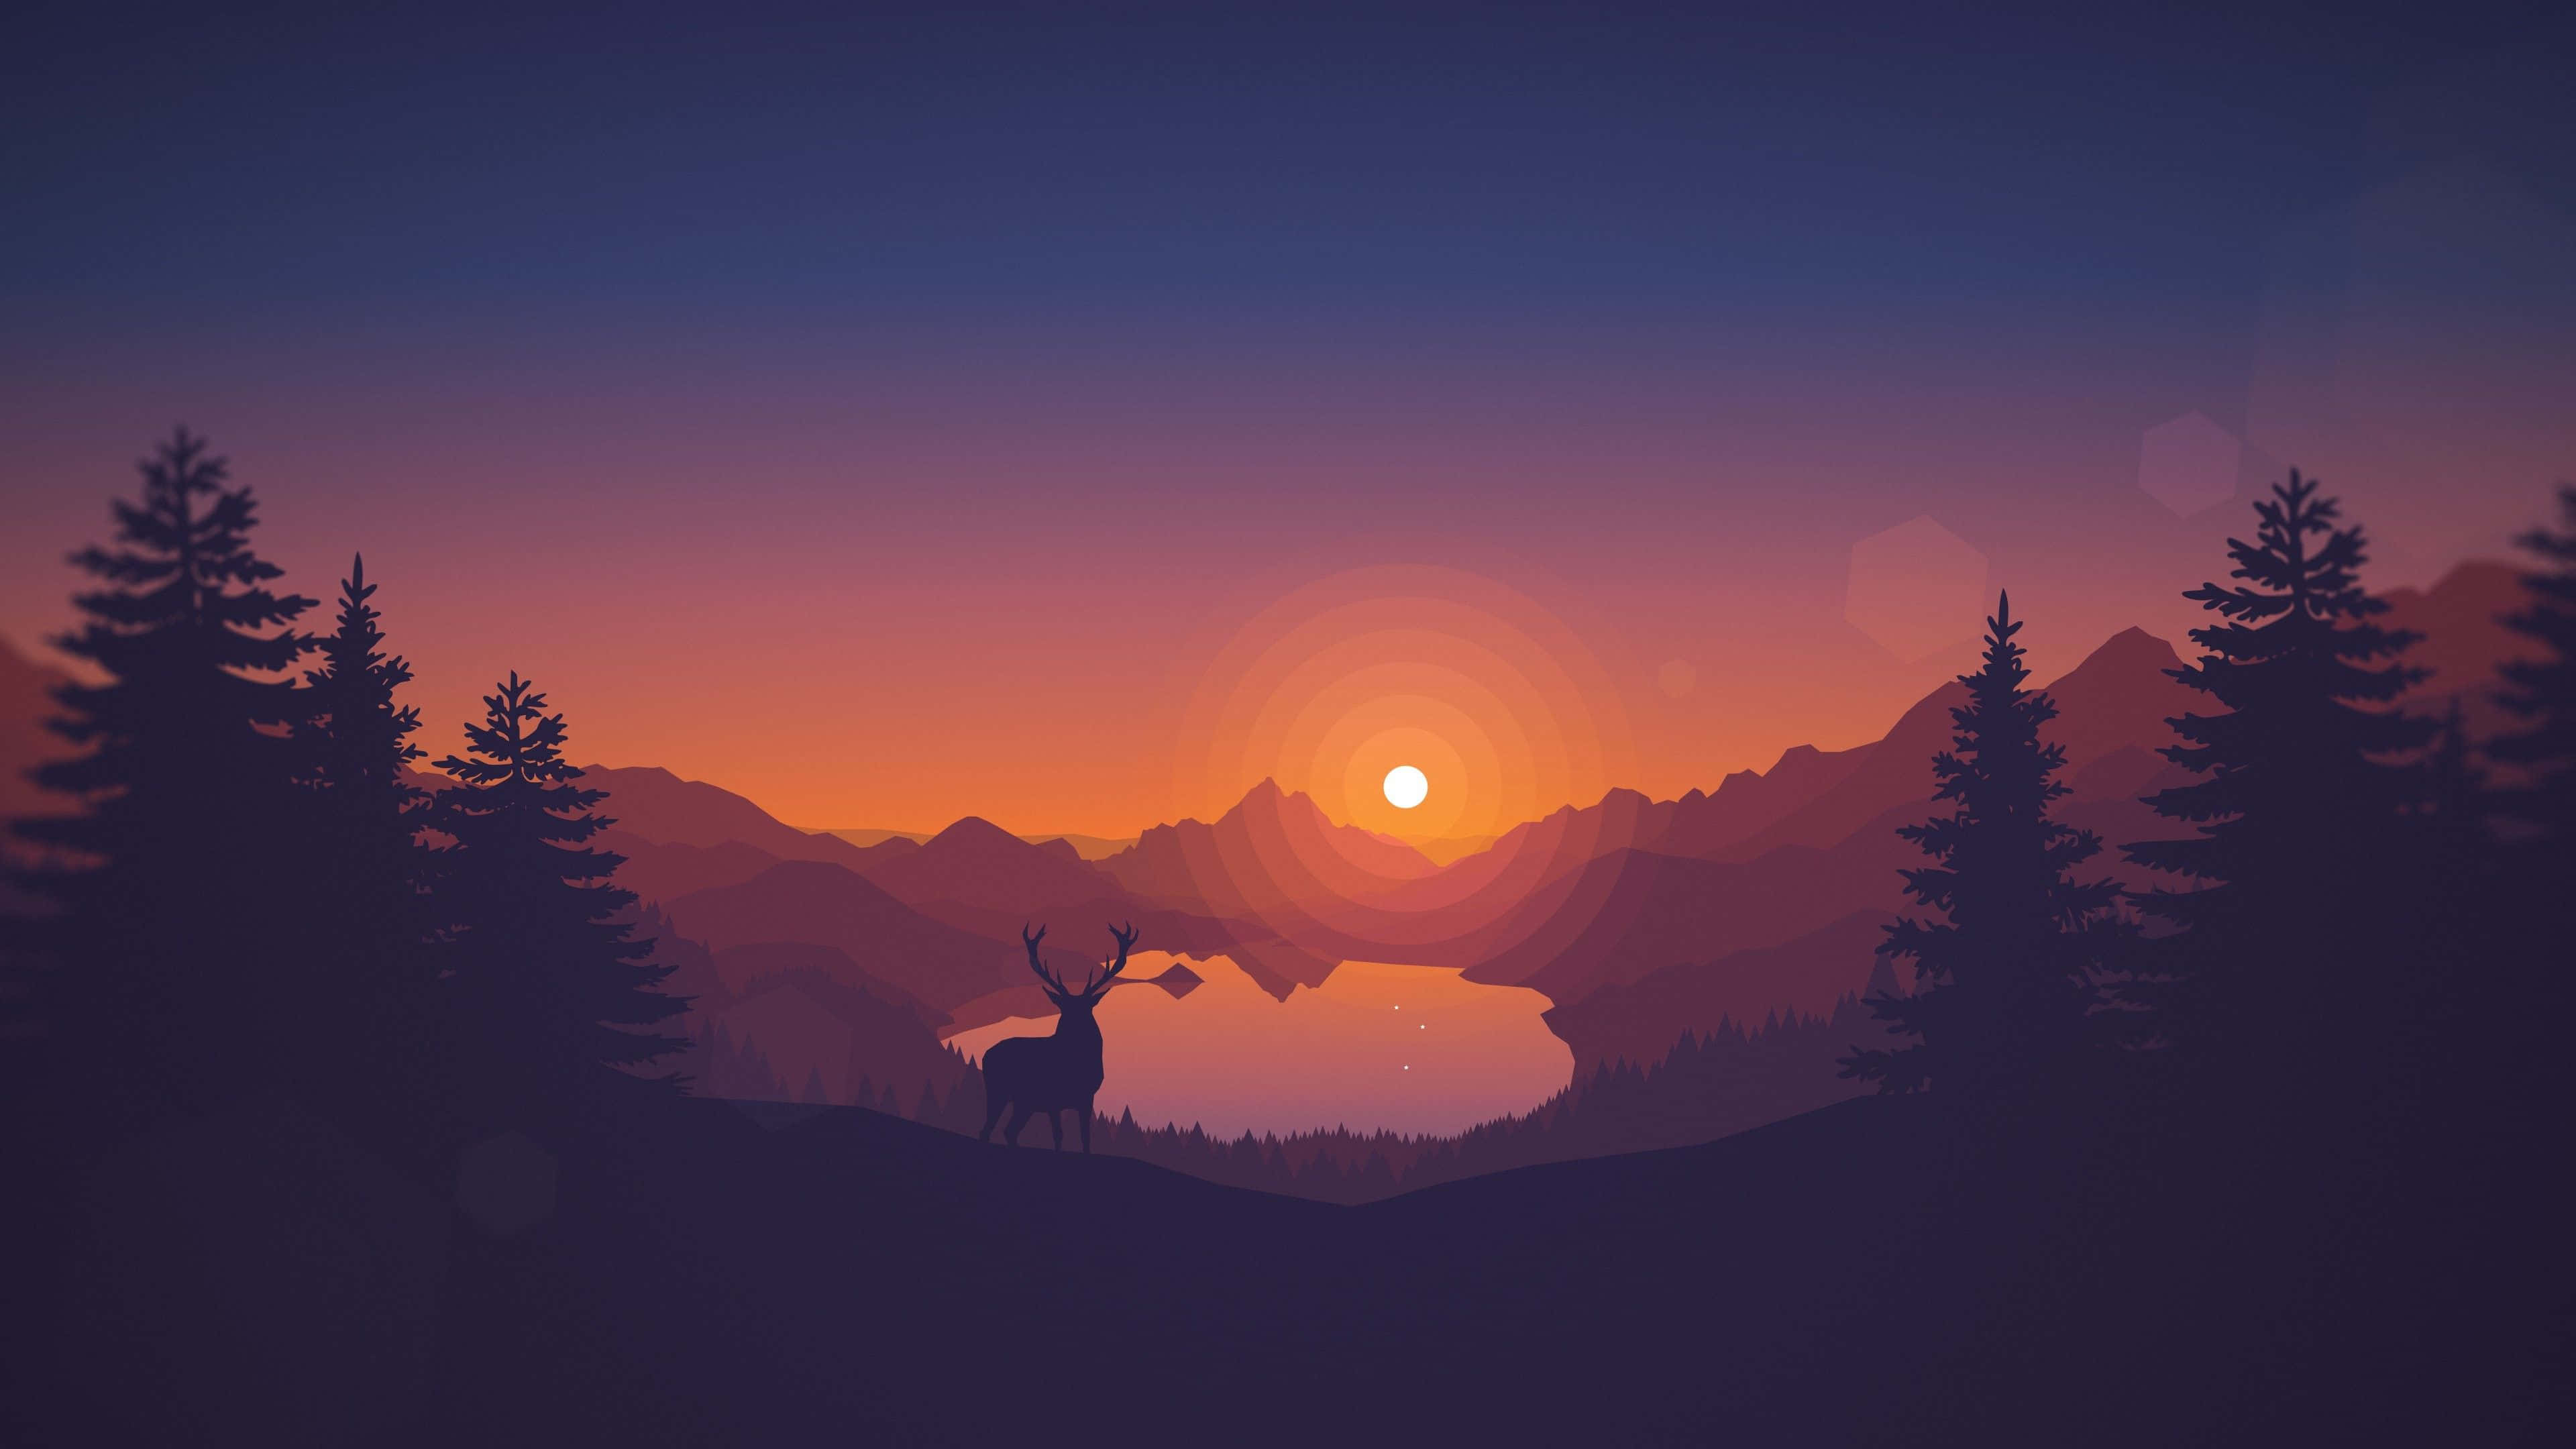 Sunset silhouette иллюстрации стим фото 10